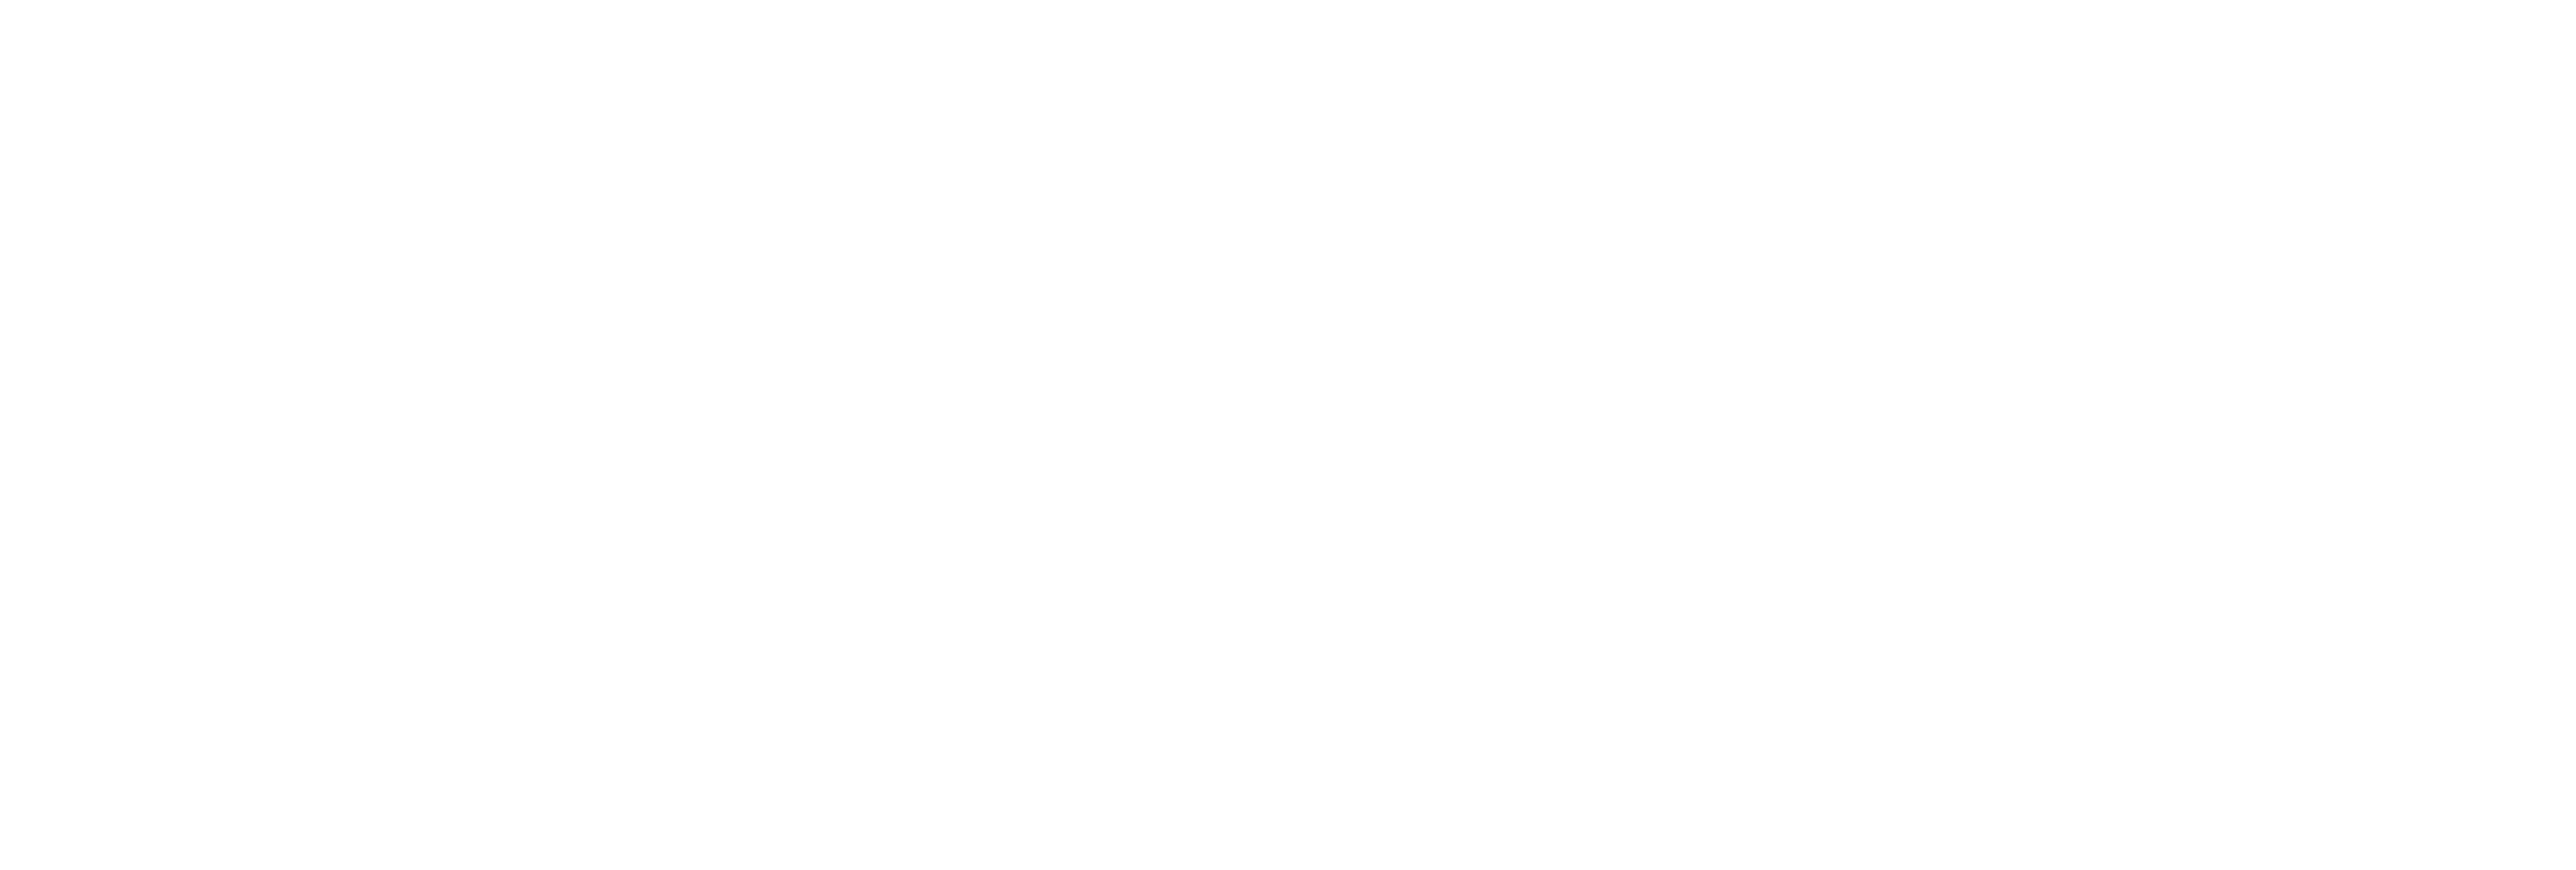 AniCura Barendrecht - Carnisselande logo